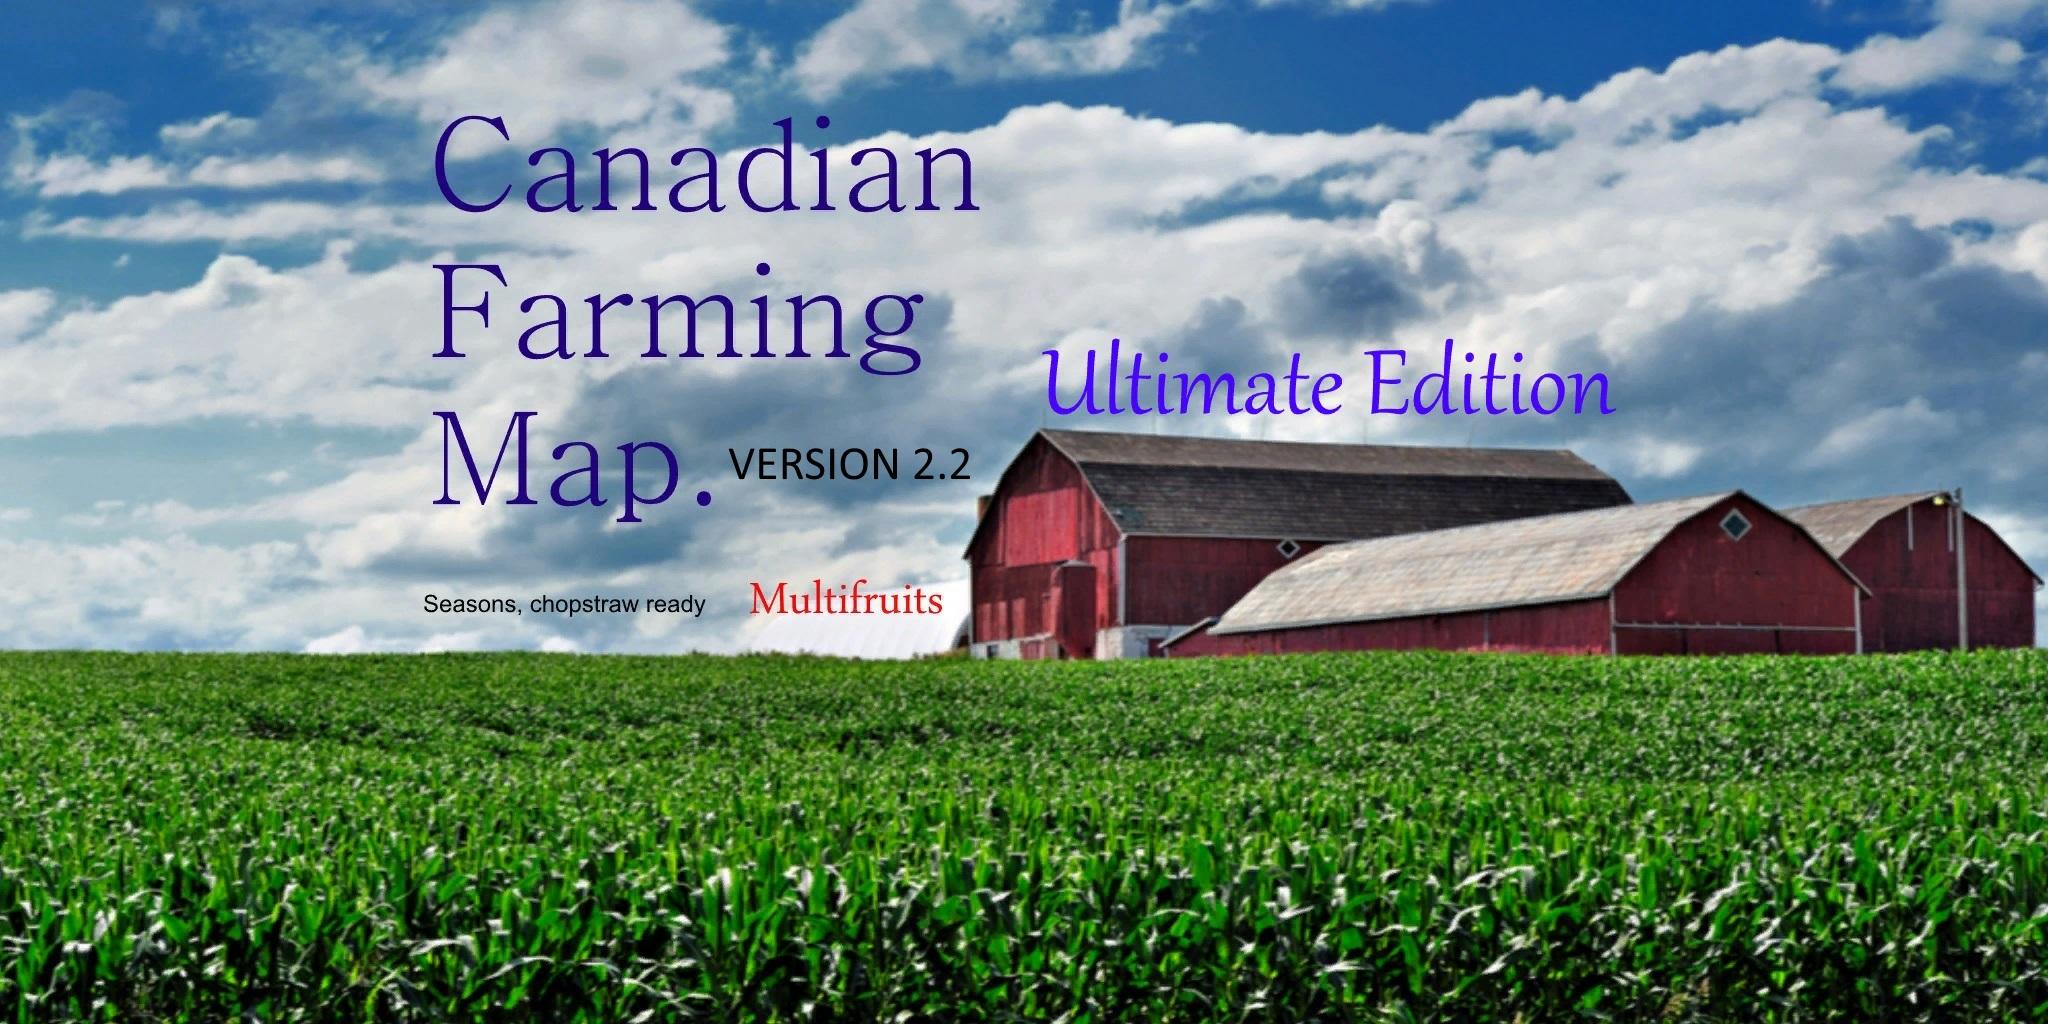 FS17 - Canadian Farming Map Ultimate Edition V2.2